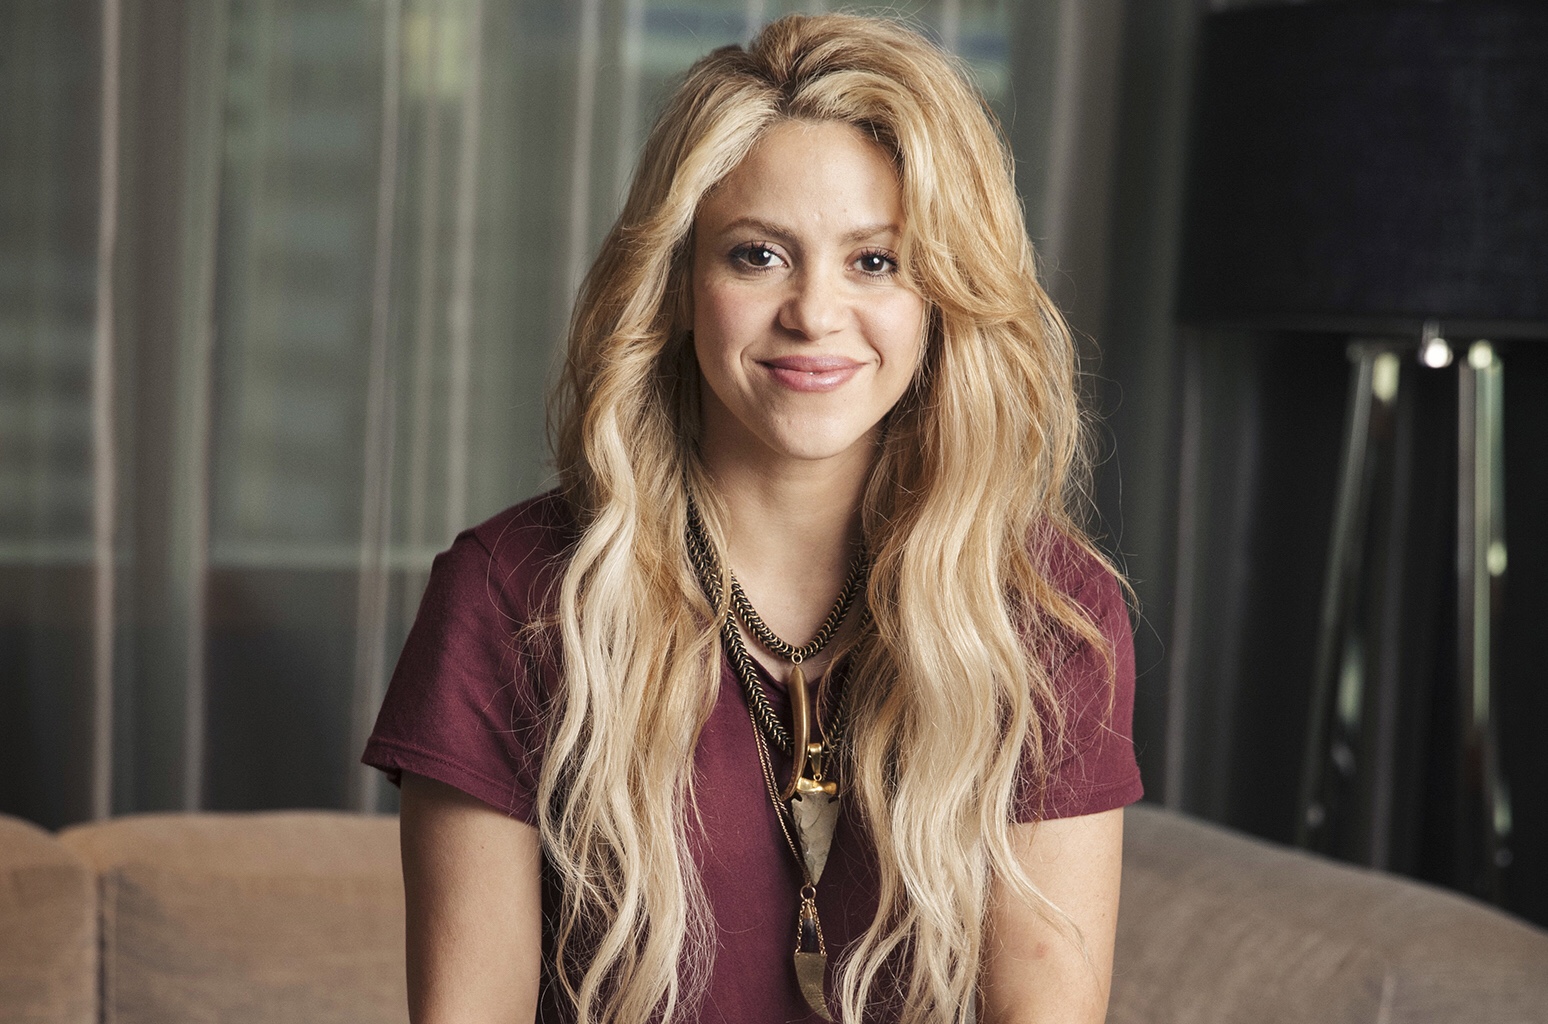 “Se ve fatal”: La FOTO de Shakira que decepcionó a sus fanáticos